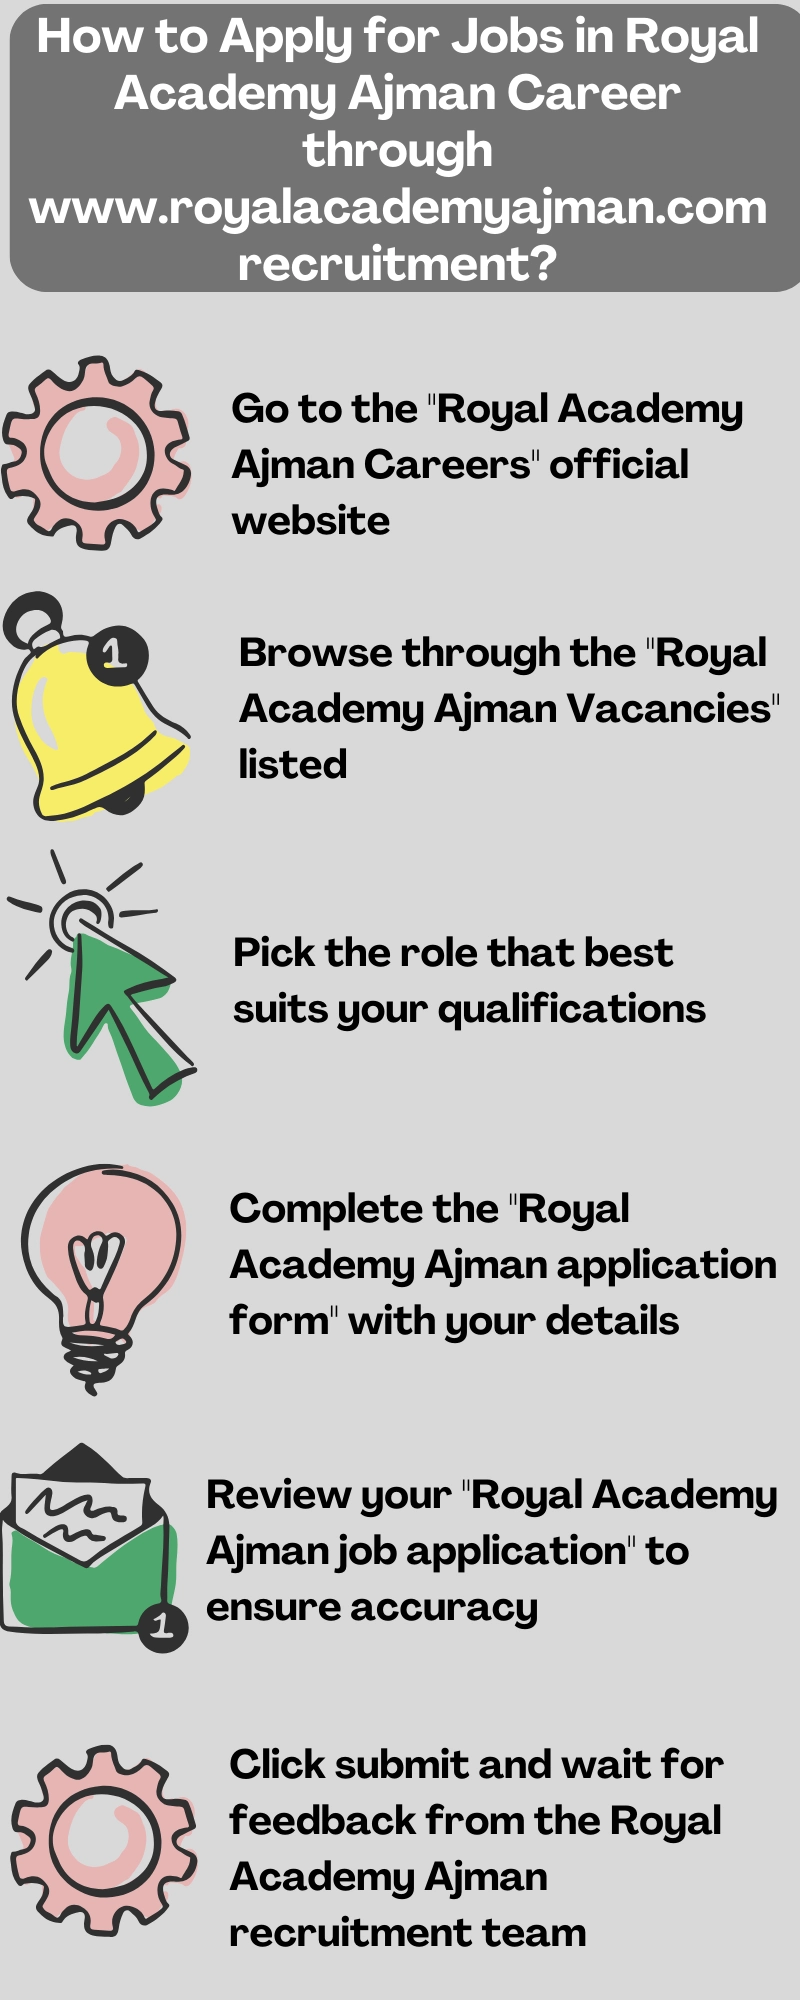 How to Apply for Jobs in Royal Academy Ajman Career through www.royalacademyajman.comrecruitment?